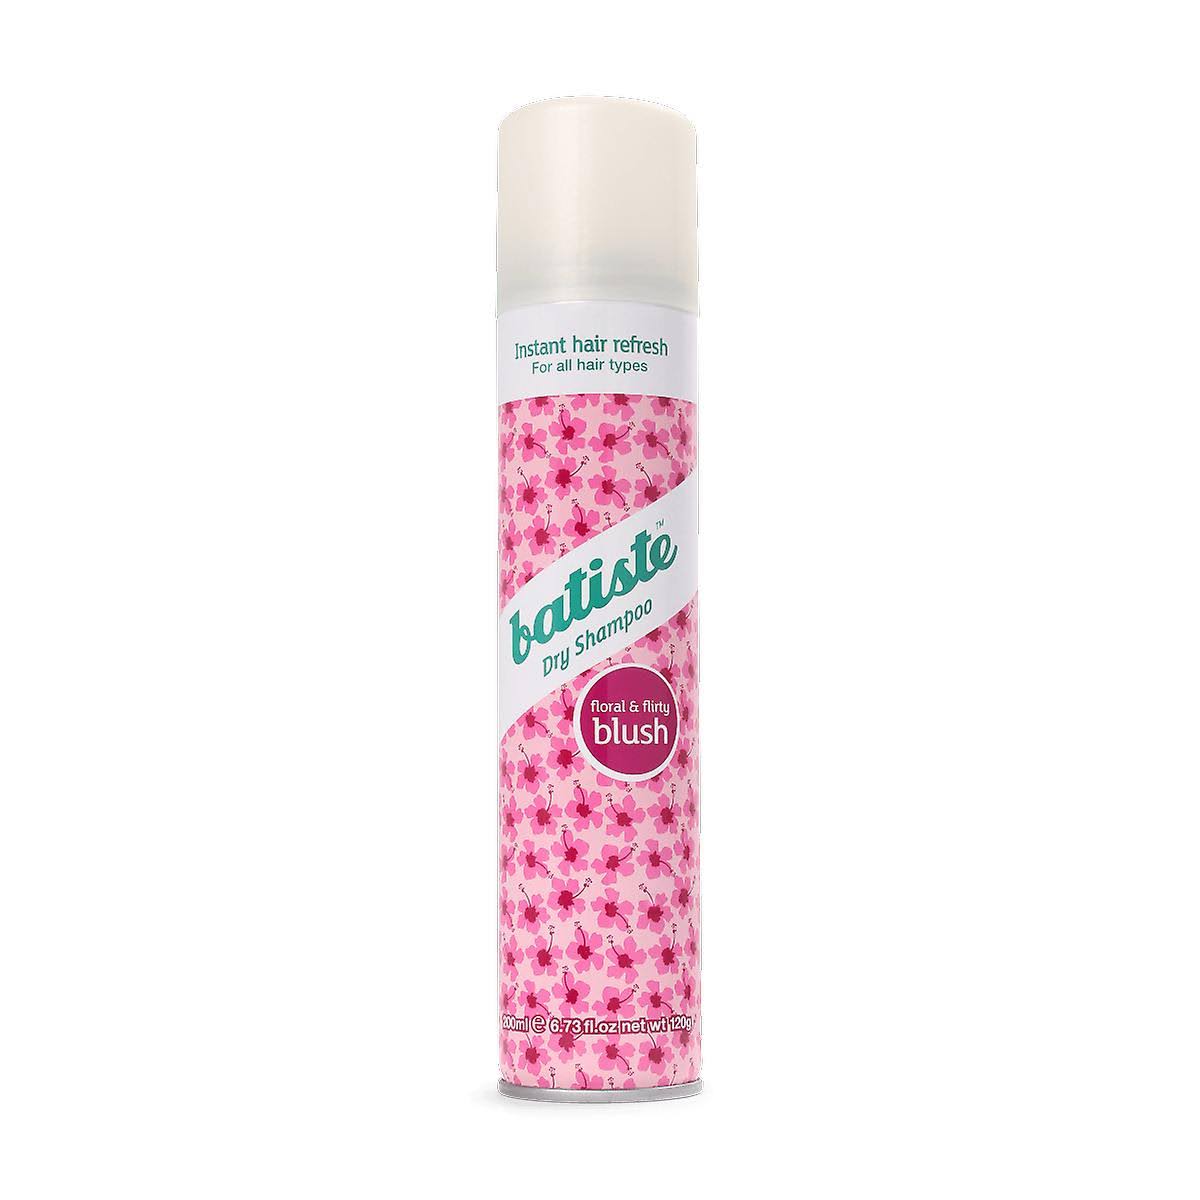 Batiste Dry Shampoo - Floral Flirty Blush, 200ml